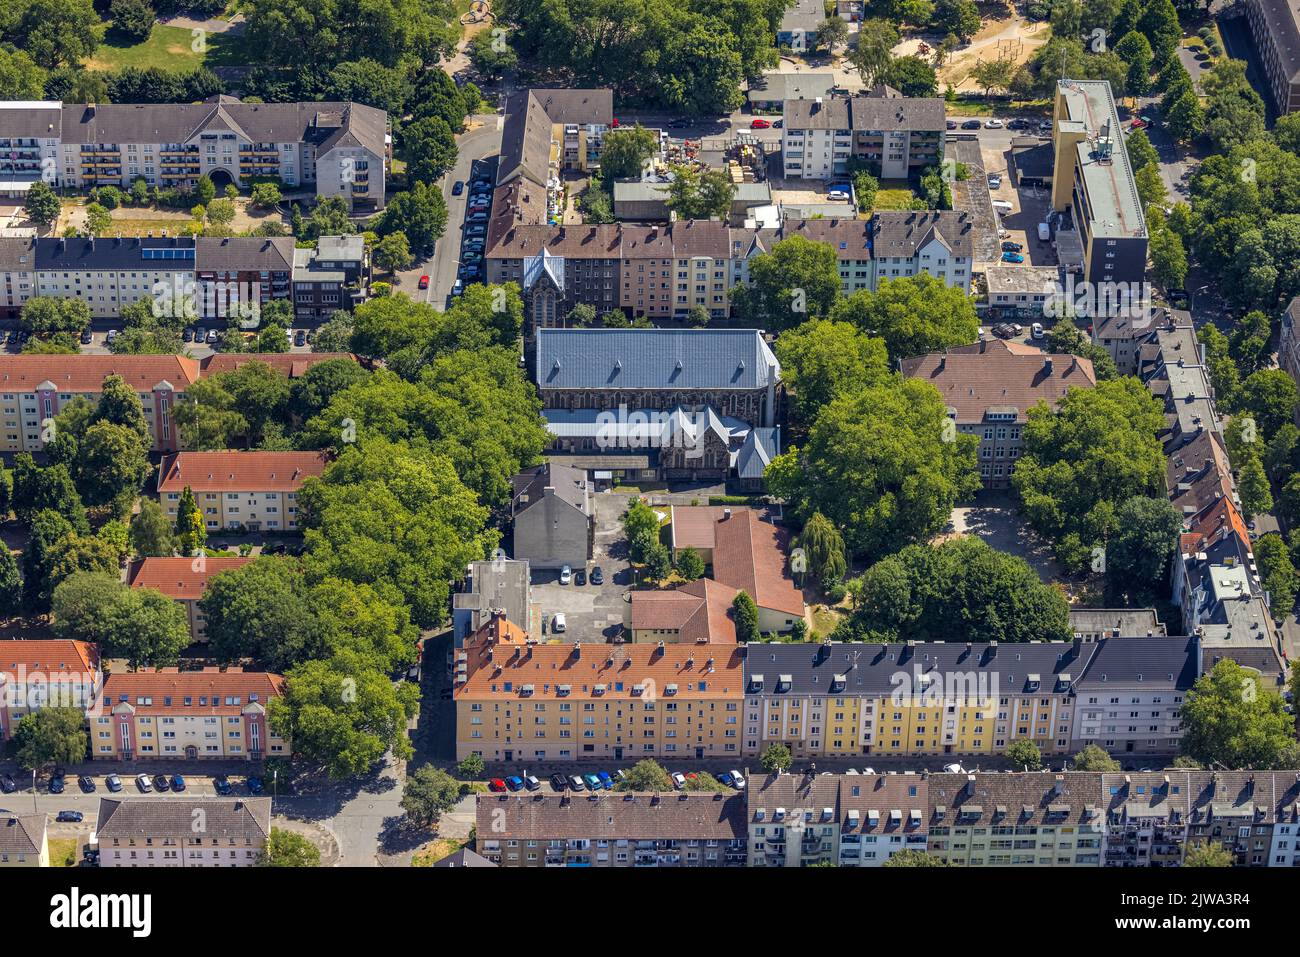 Aerial view, catholic church St. Aposteln, Lessing elementary school, harbor, Dortmund, Ruhr area, North Rhine-Westphalia, Germany, Worship site, Educ Stock Photo